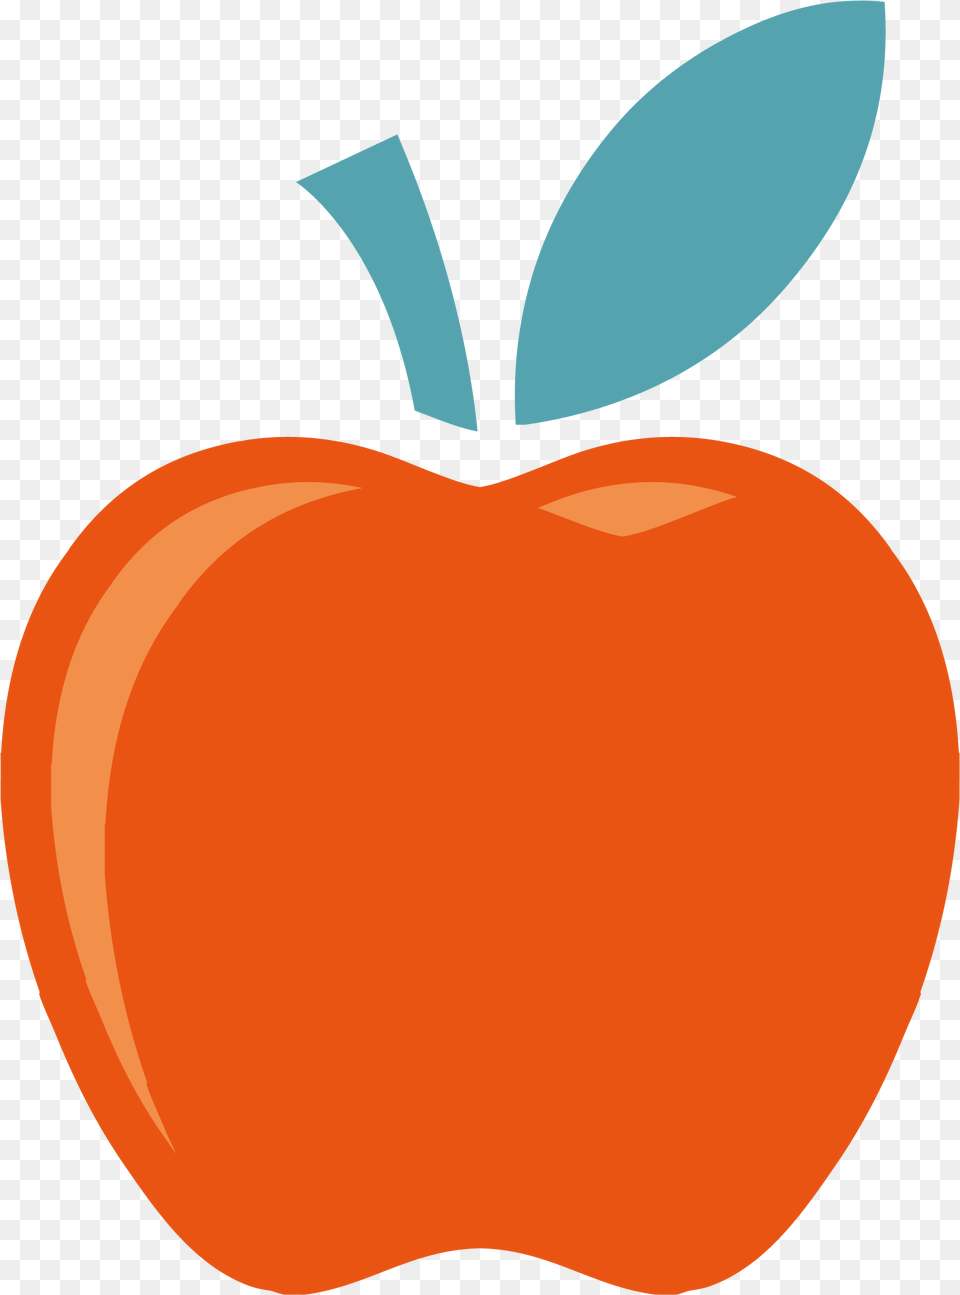 Mcintosh Animation Apple, Food, Fruit, Plant, Produce Png Image